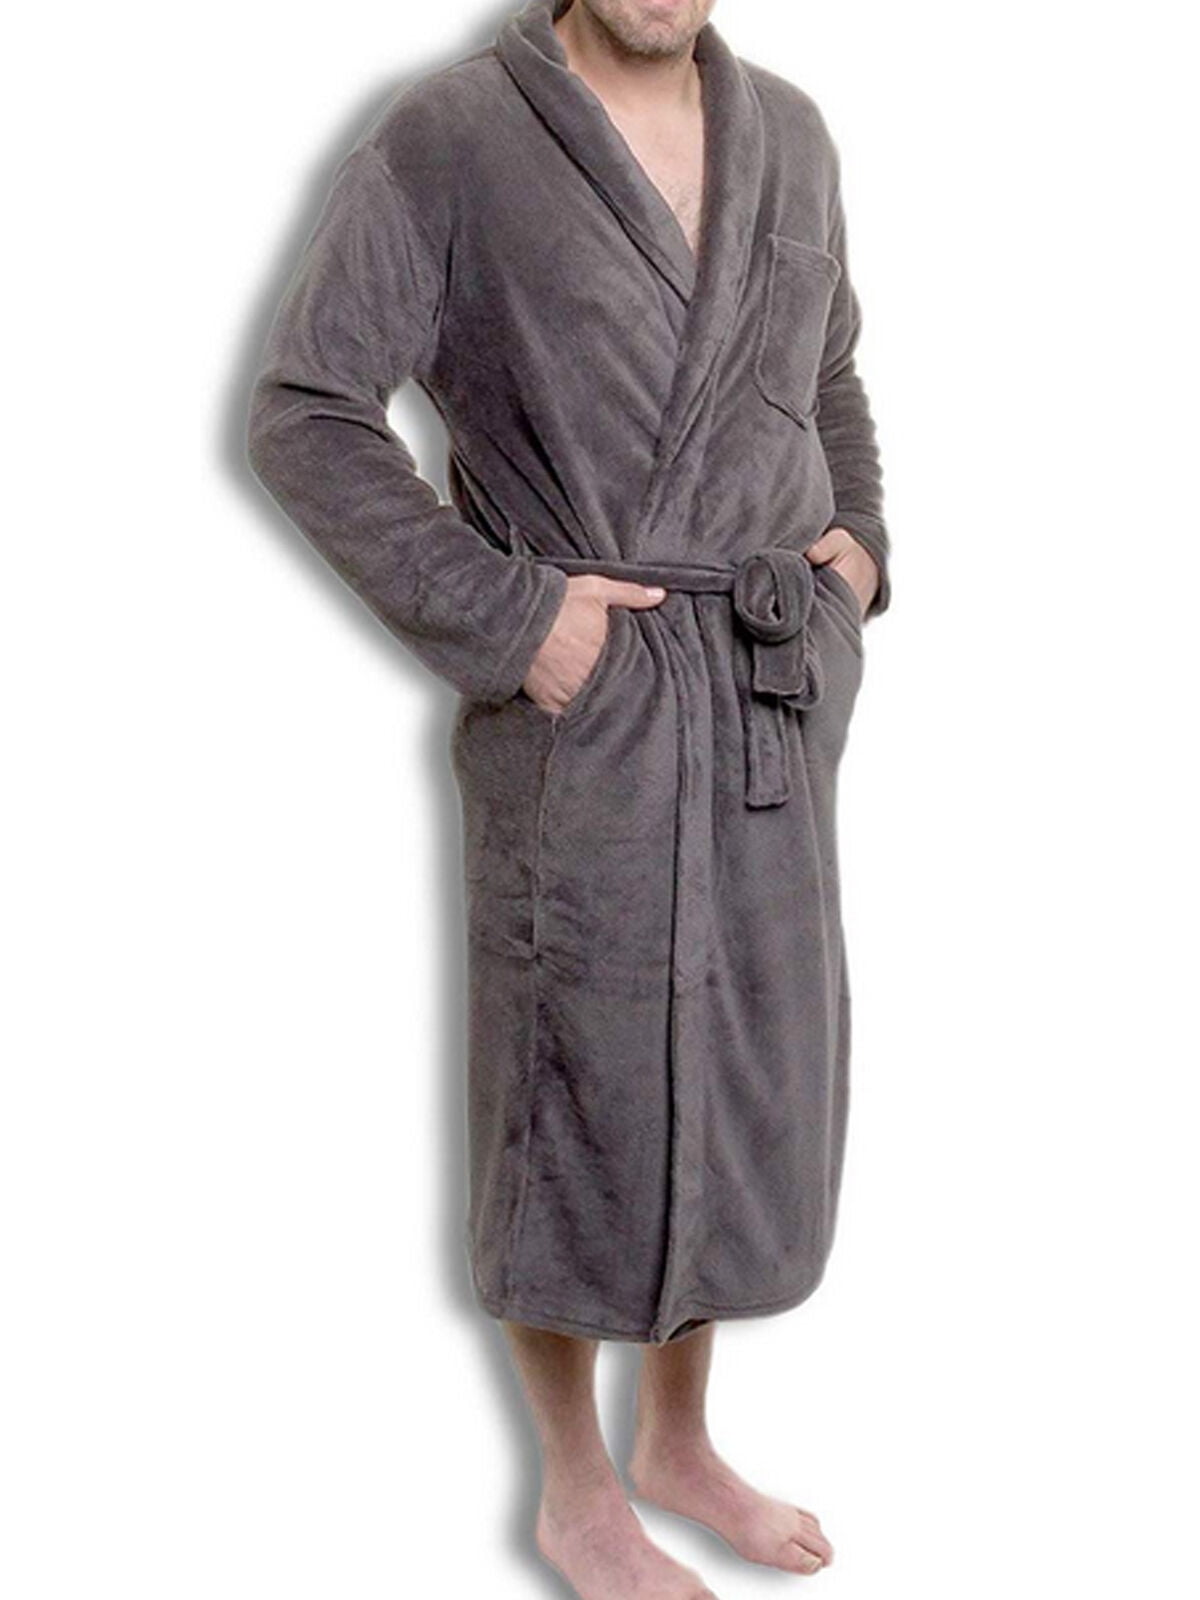 TIFENNY Mens Winter Long Sleeved Robe Coat Hooded Soft Plush Lengthened Shawl Bathrobe Home Clothes Angel